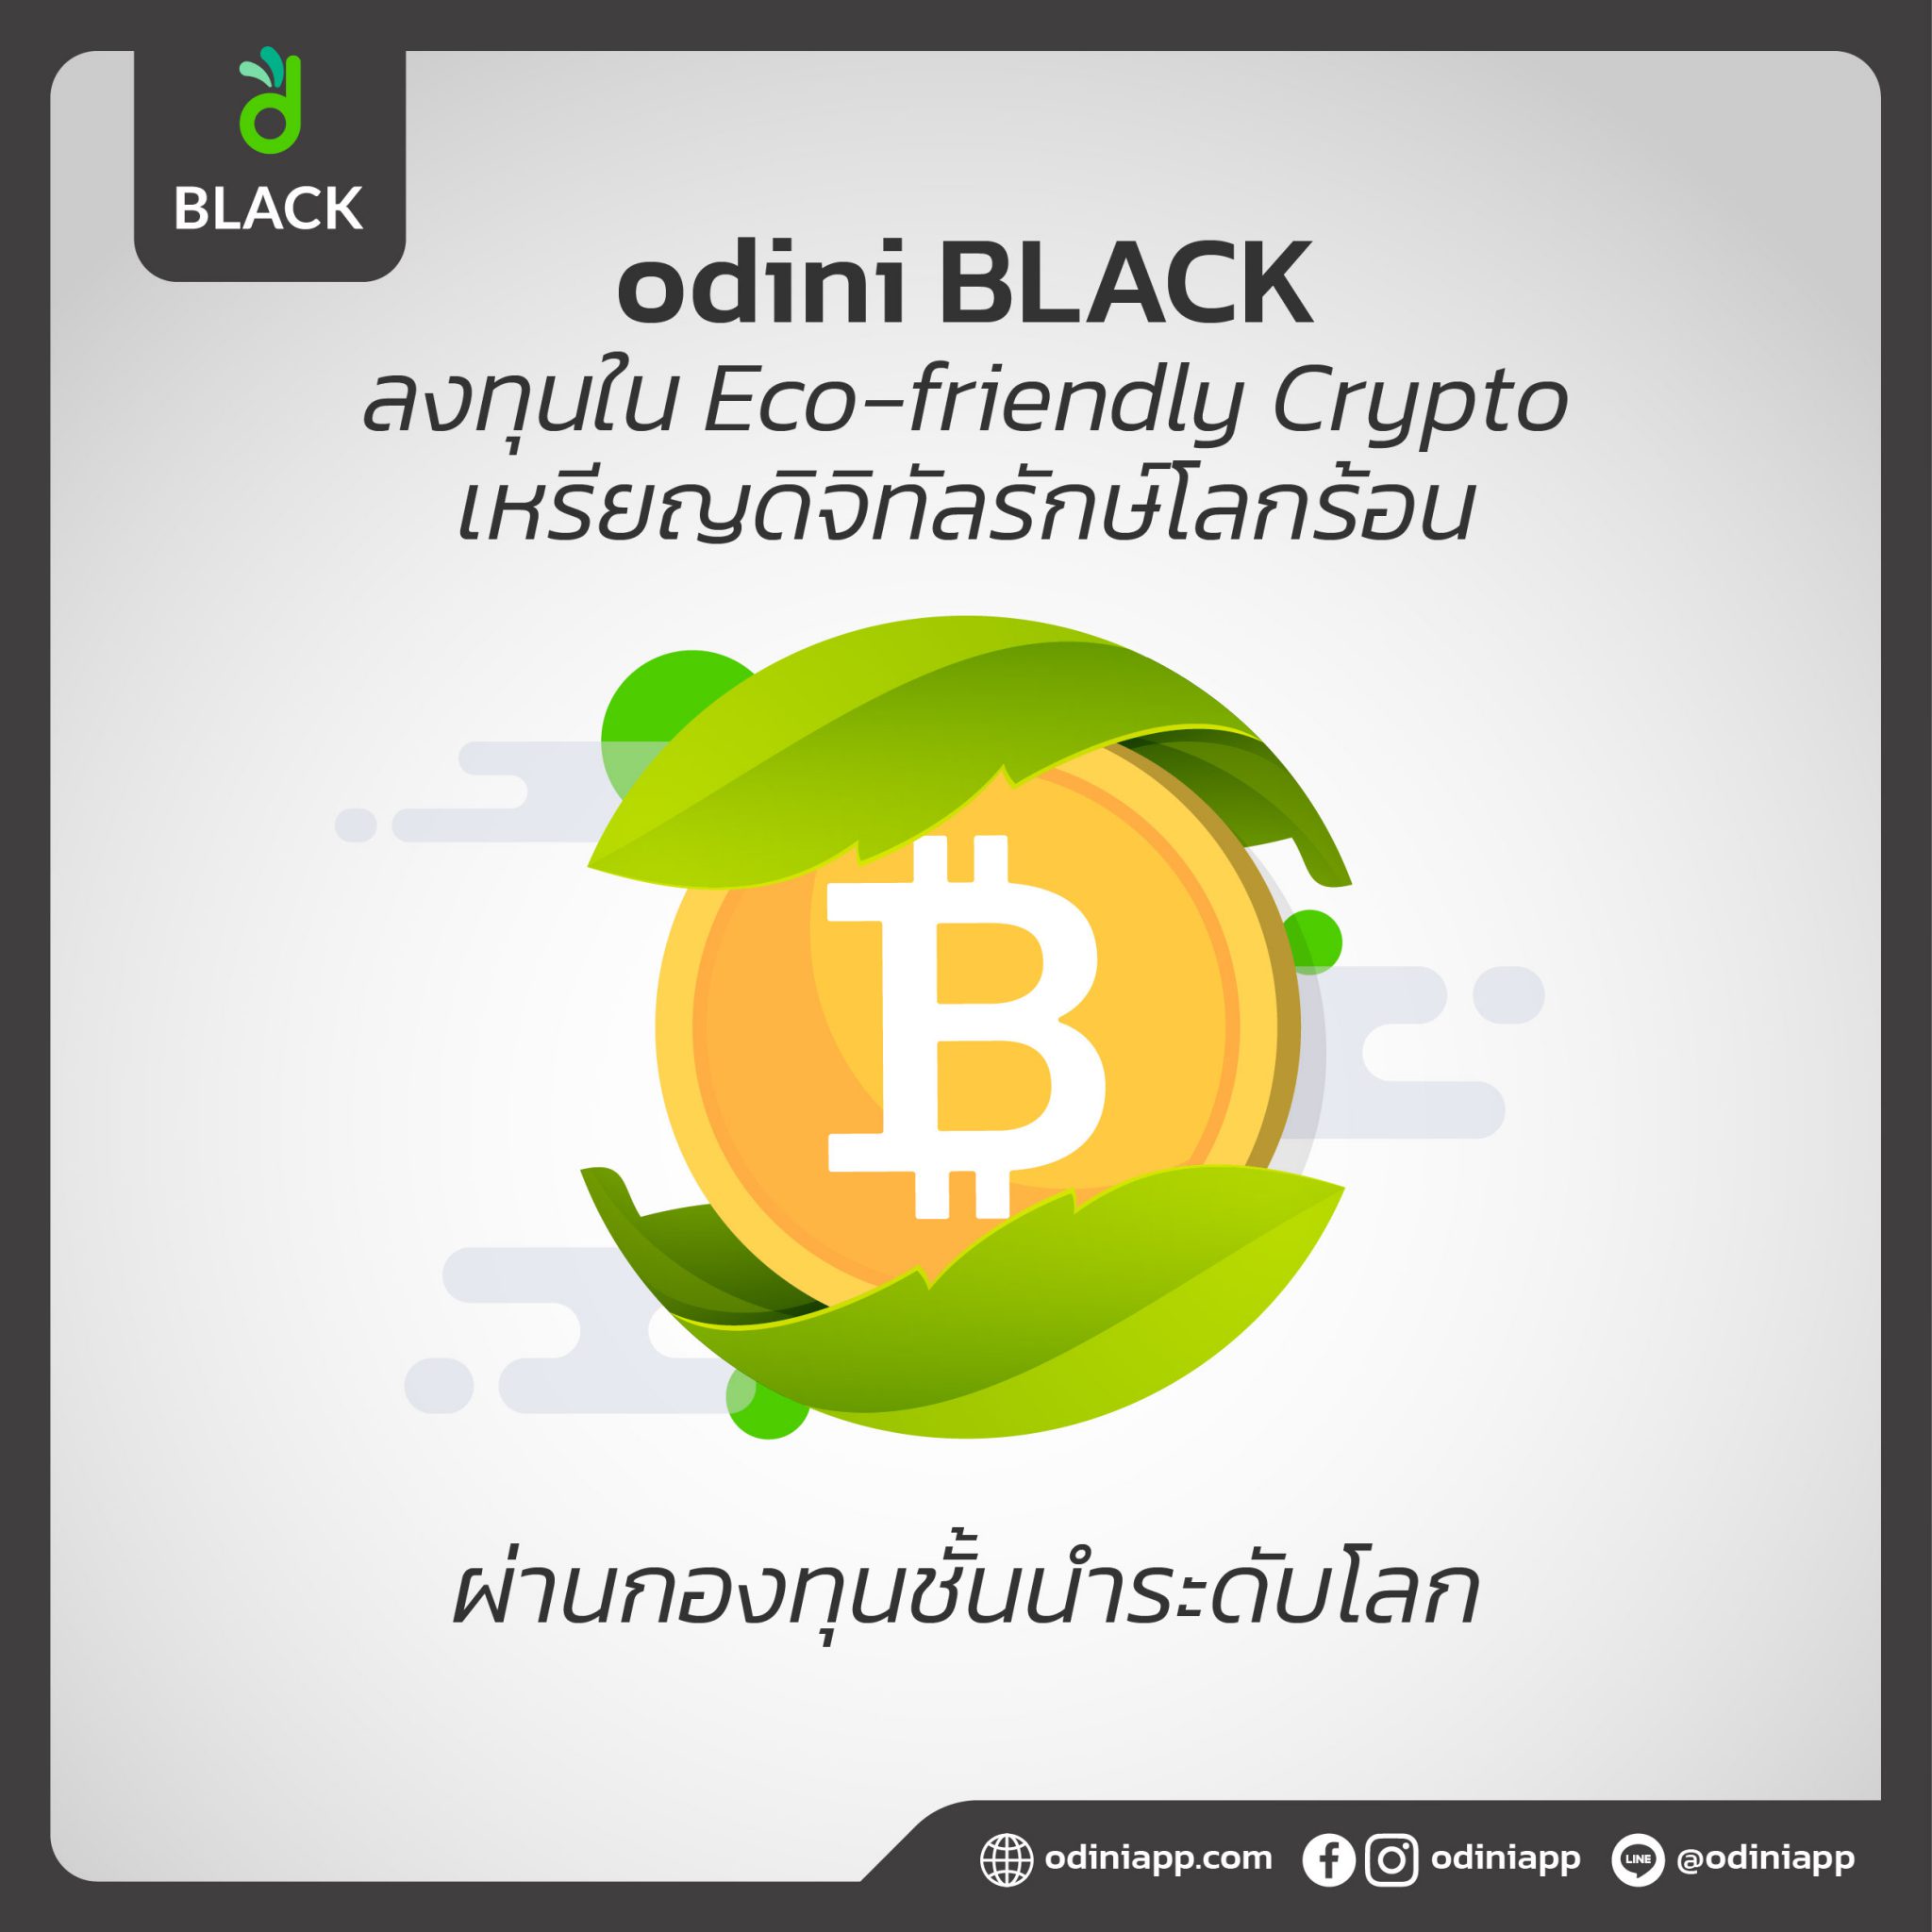 Odini Black ลงทุนใน Eco-Friendly Crypto เหรียญดิจิทัลรักษ์โลกร้อน  ผ่านกองทุนชั้นนำระดับโลก – Odini ลงทุนกองทุนอัตโนมัติด้วย Robo-Advisor  แอปแรกในไทย